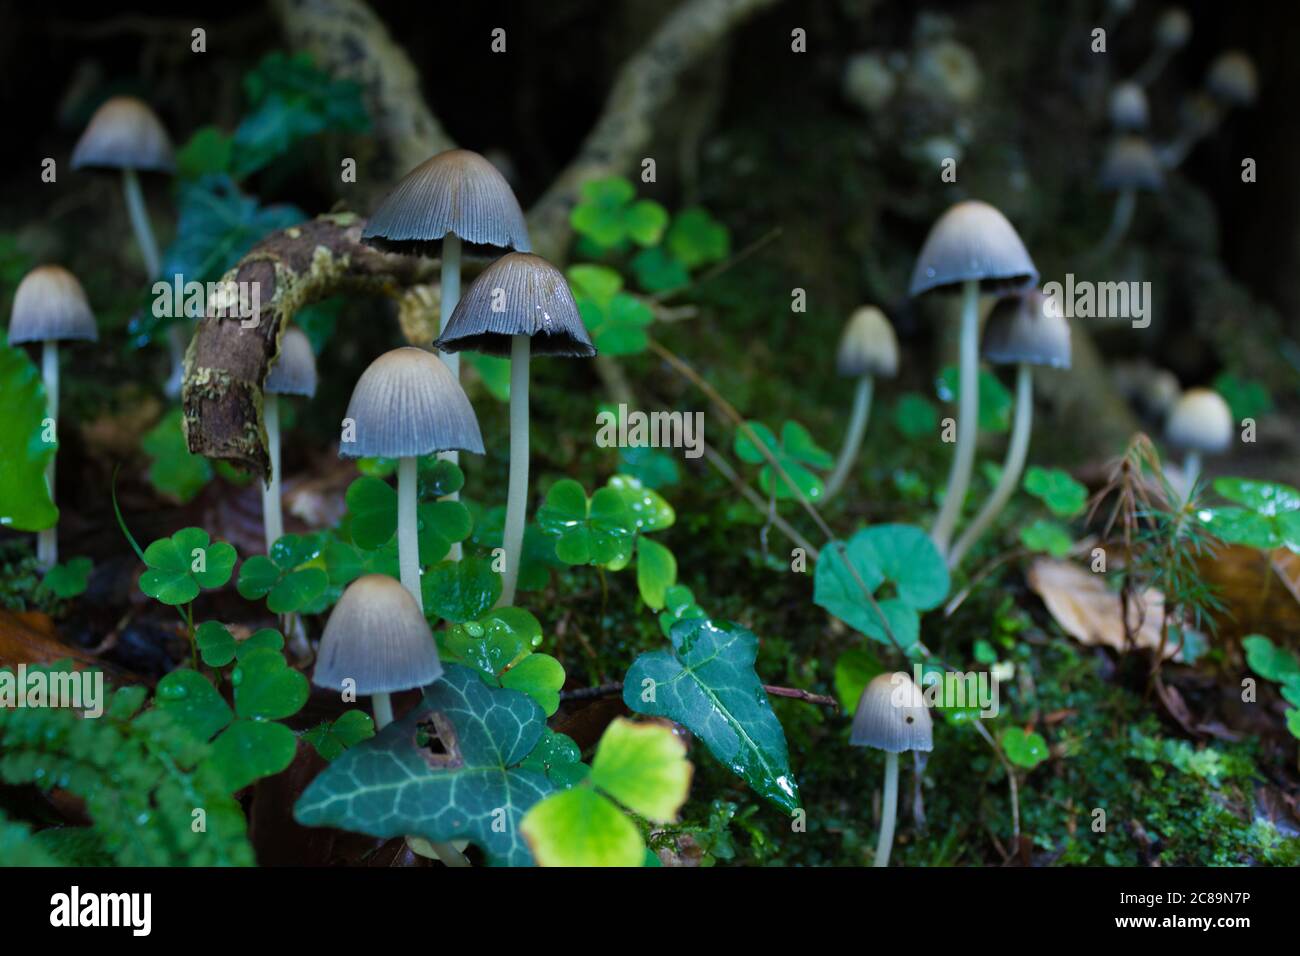 Shiny cap mushrooms (Coprinellus micaceus) at low angle Stock Photo